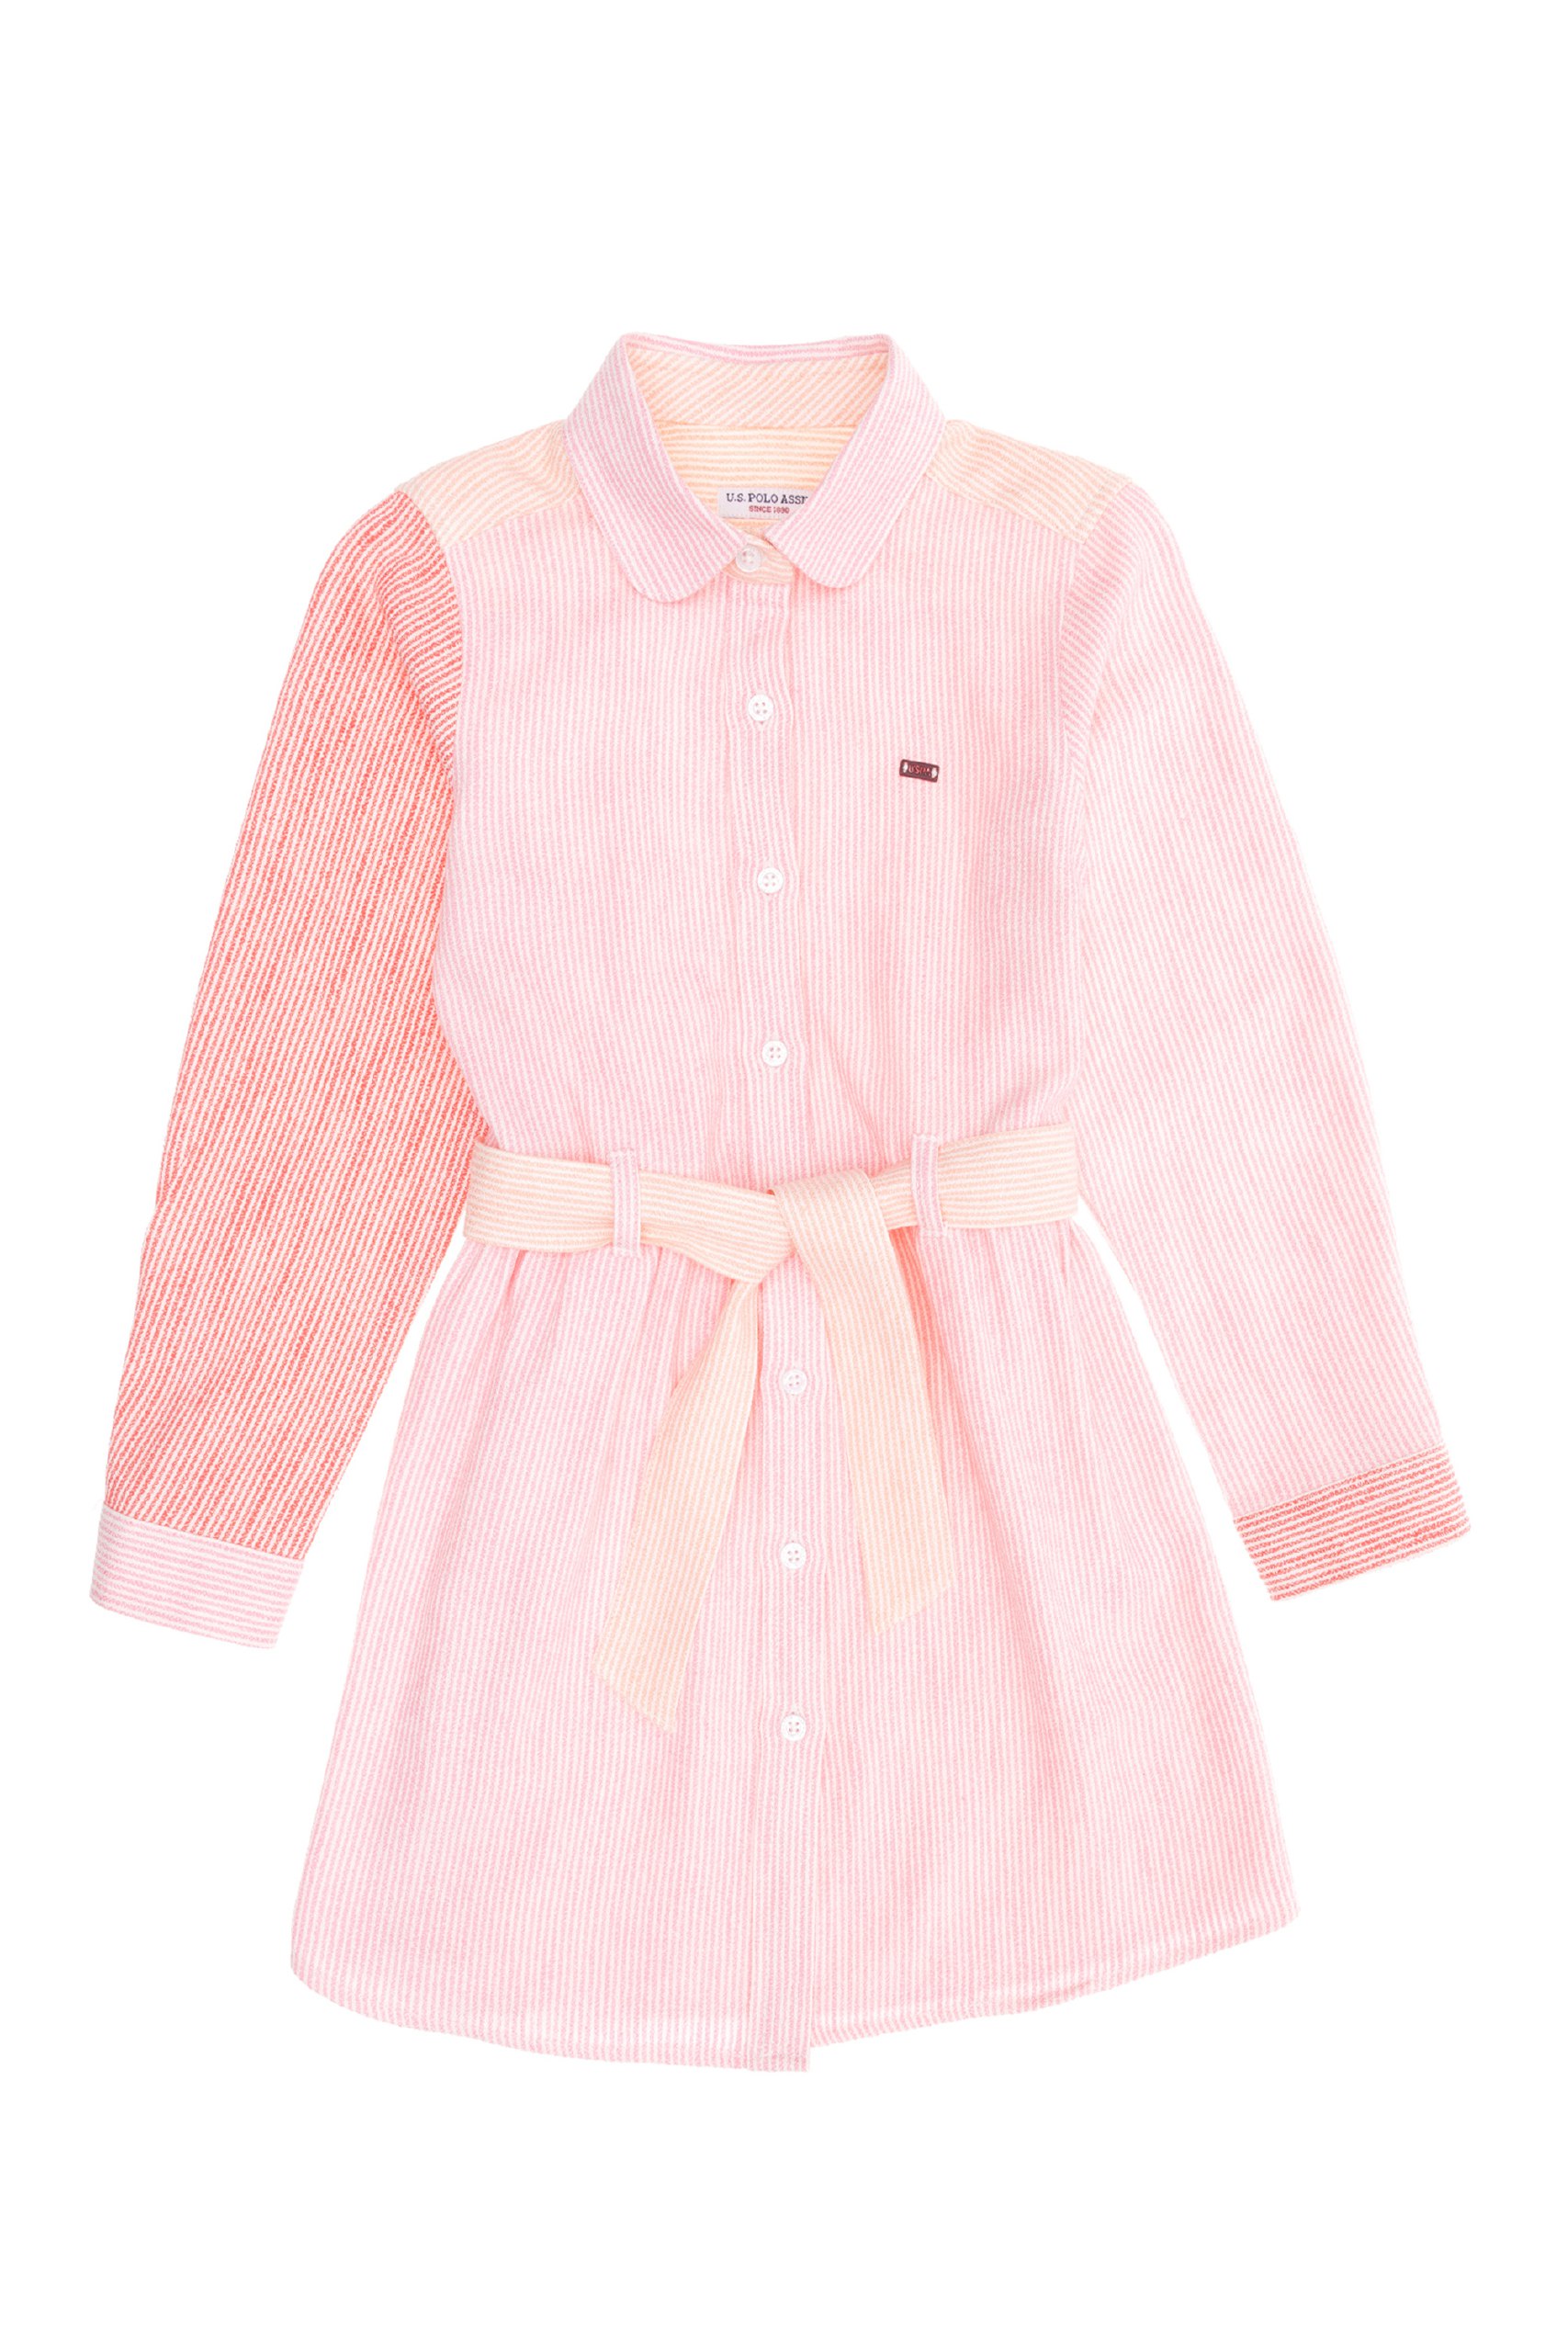 Платье U.S. Polo Assn. розовое, красное, 128,134, G084SZ032-000-1568511-SAMIRA_VR078_8_9